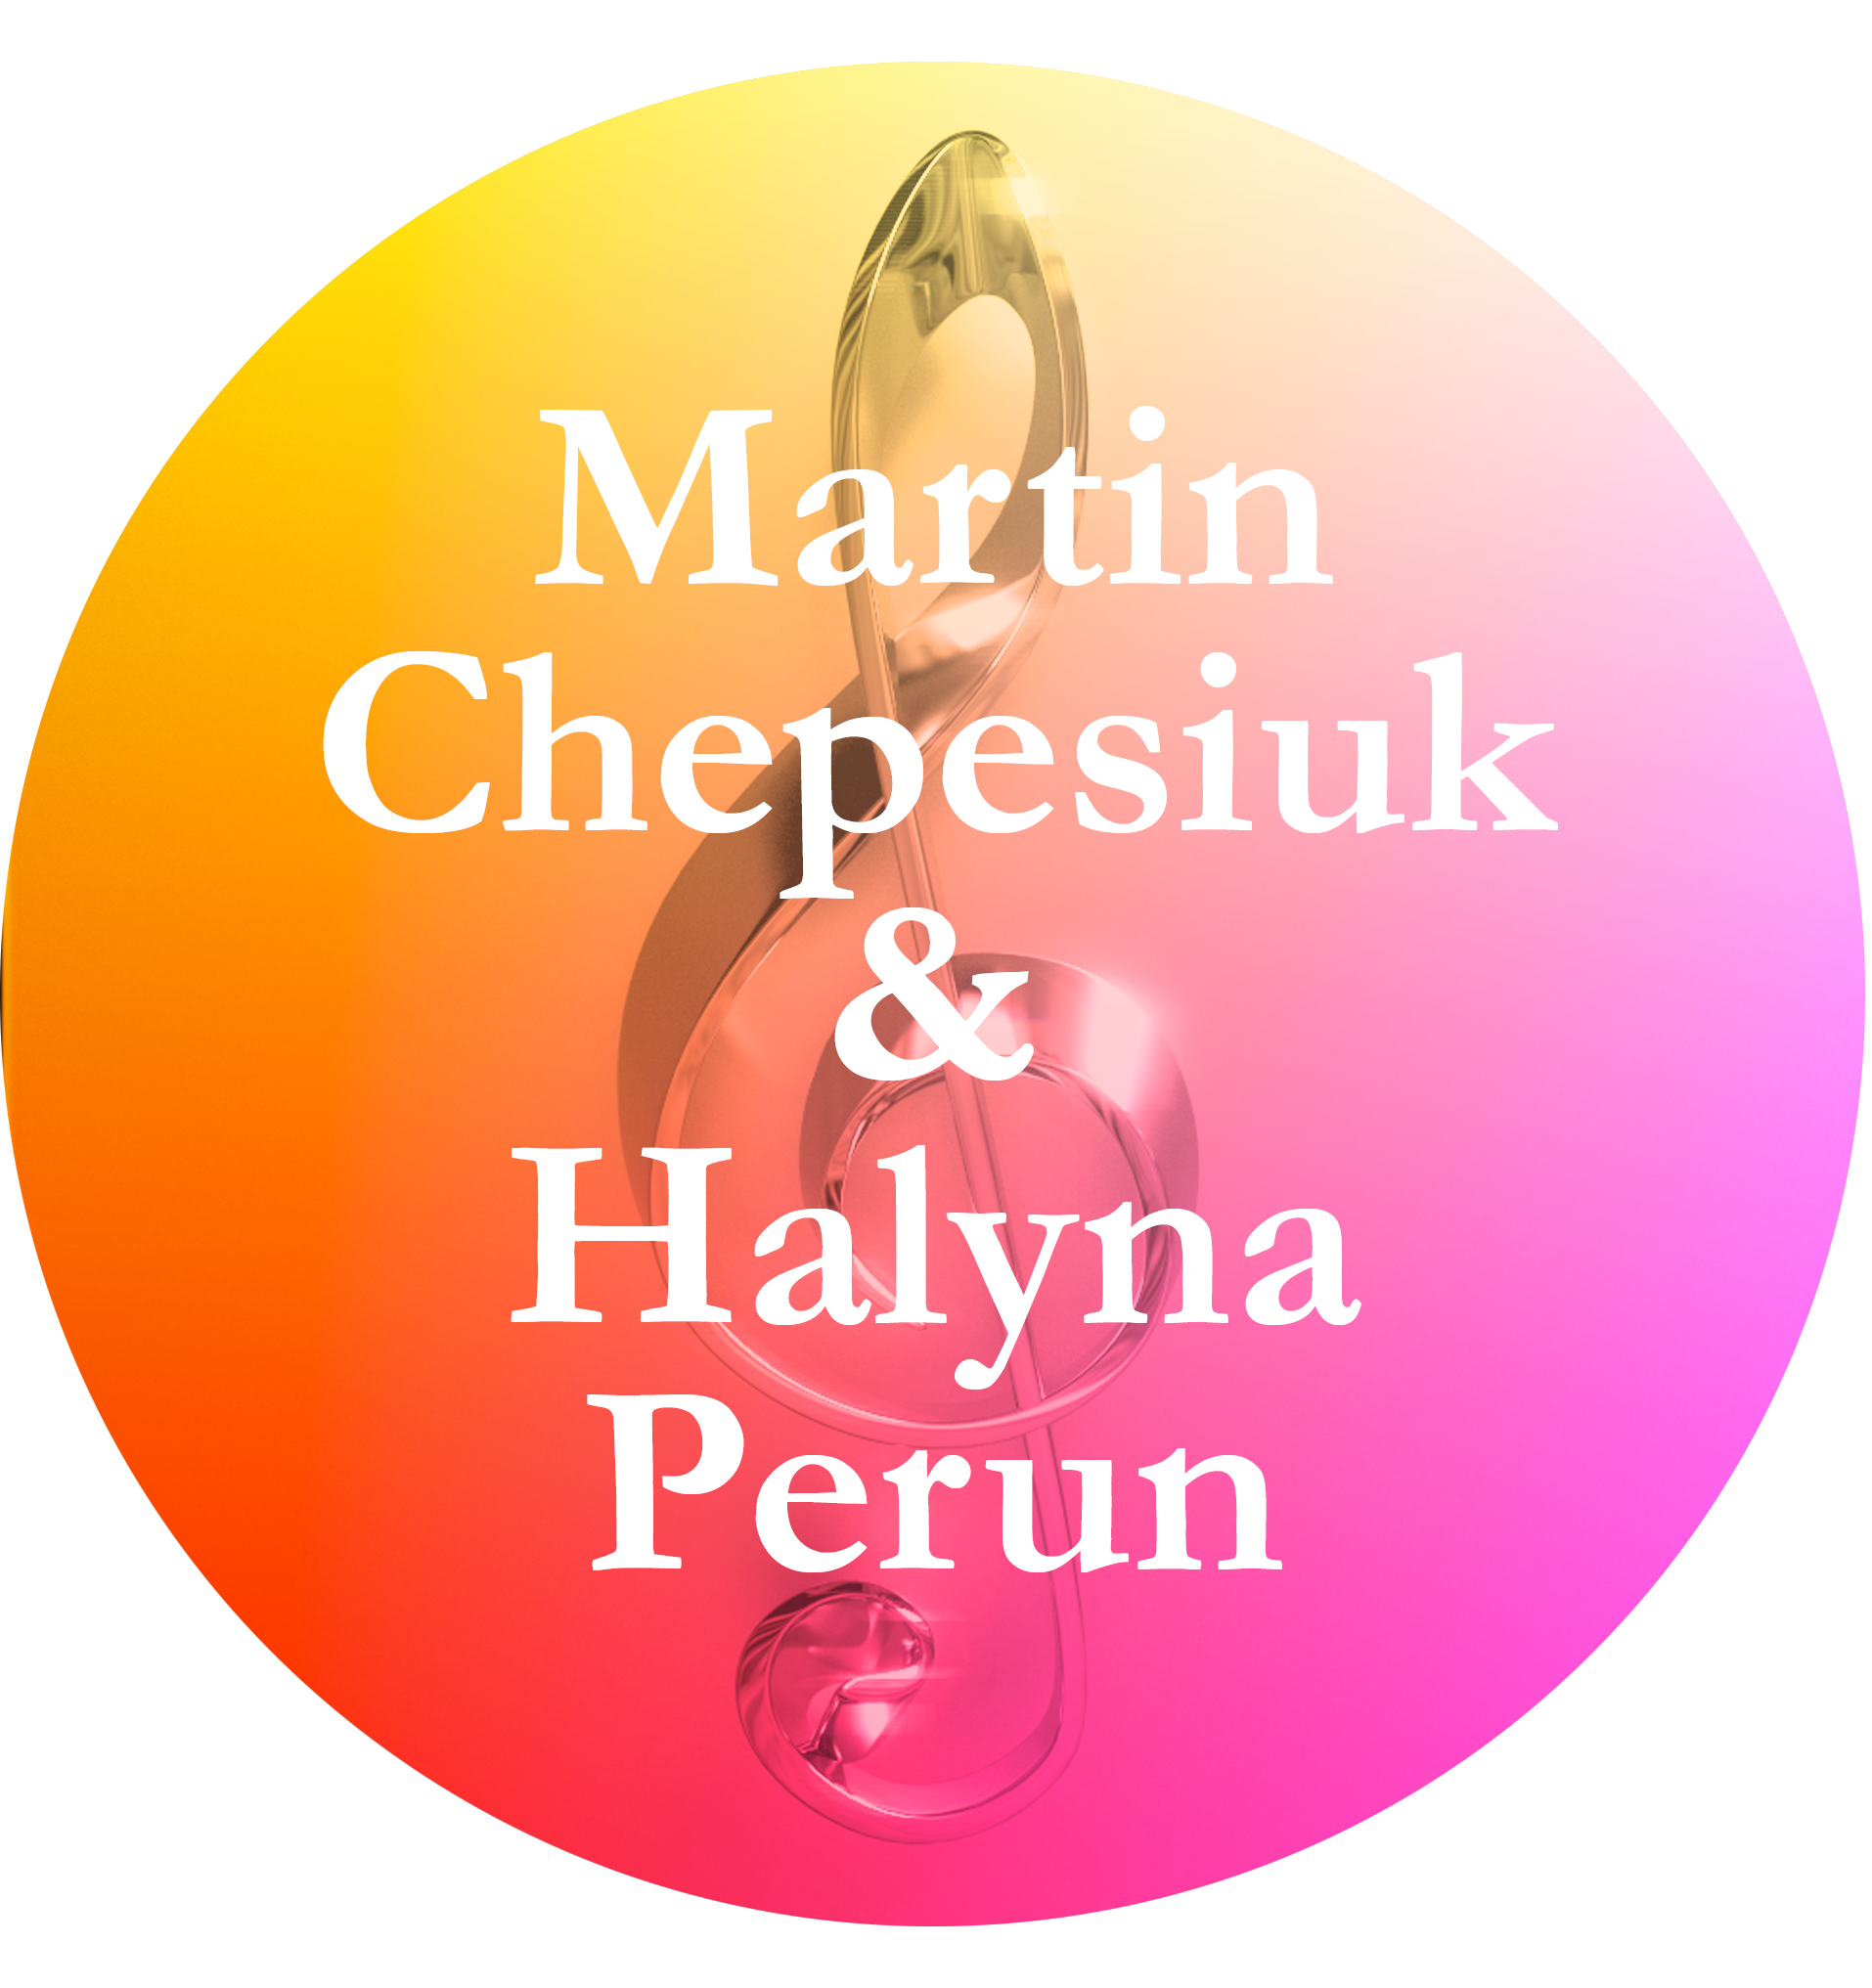 Martin-Chepesiuk-&-Halyna-Perun.png